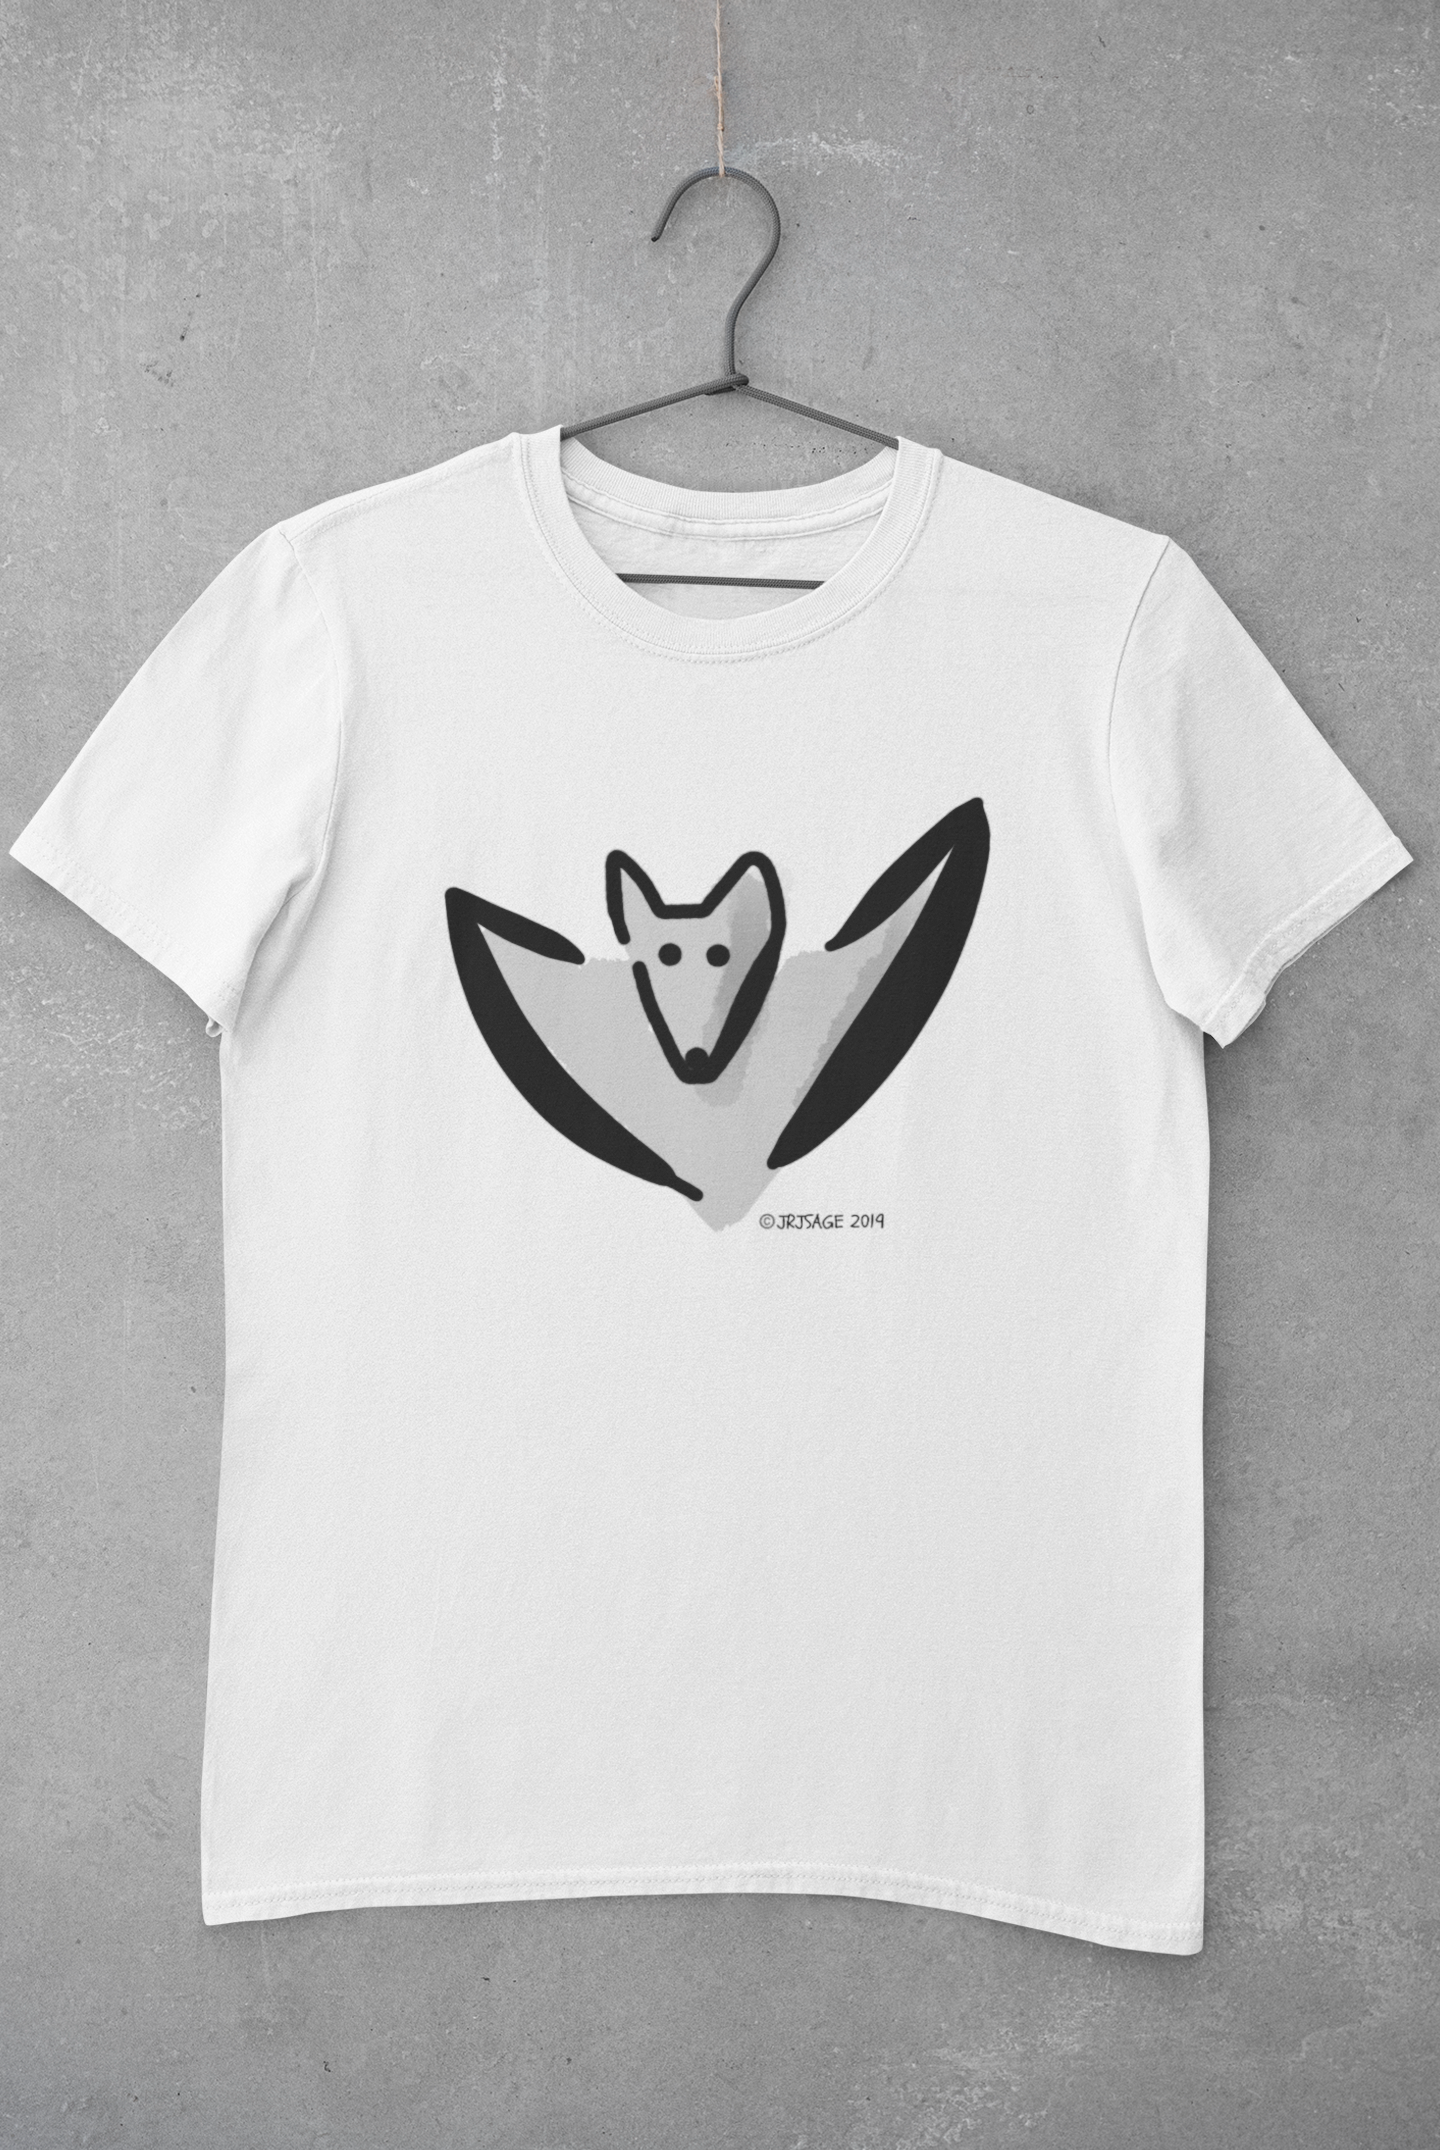 Bat T-shirt - A Bertie Bat Halloween original illustrated design on a classic white Hector and Bone vegan cotton t-shirt